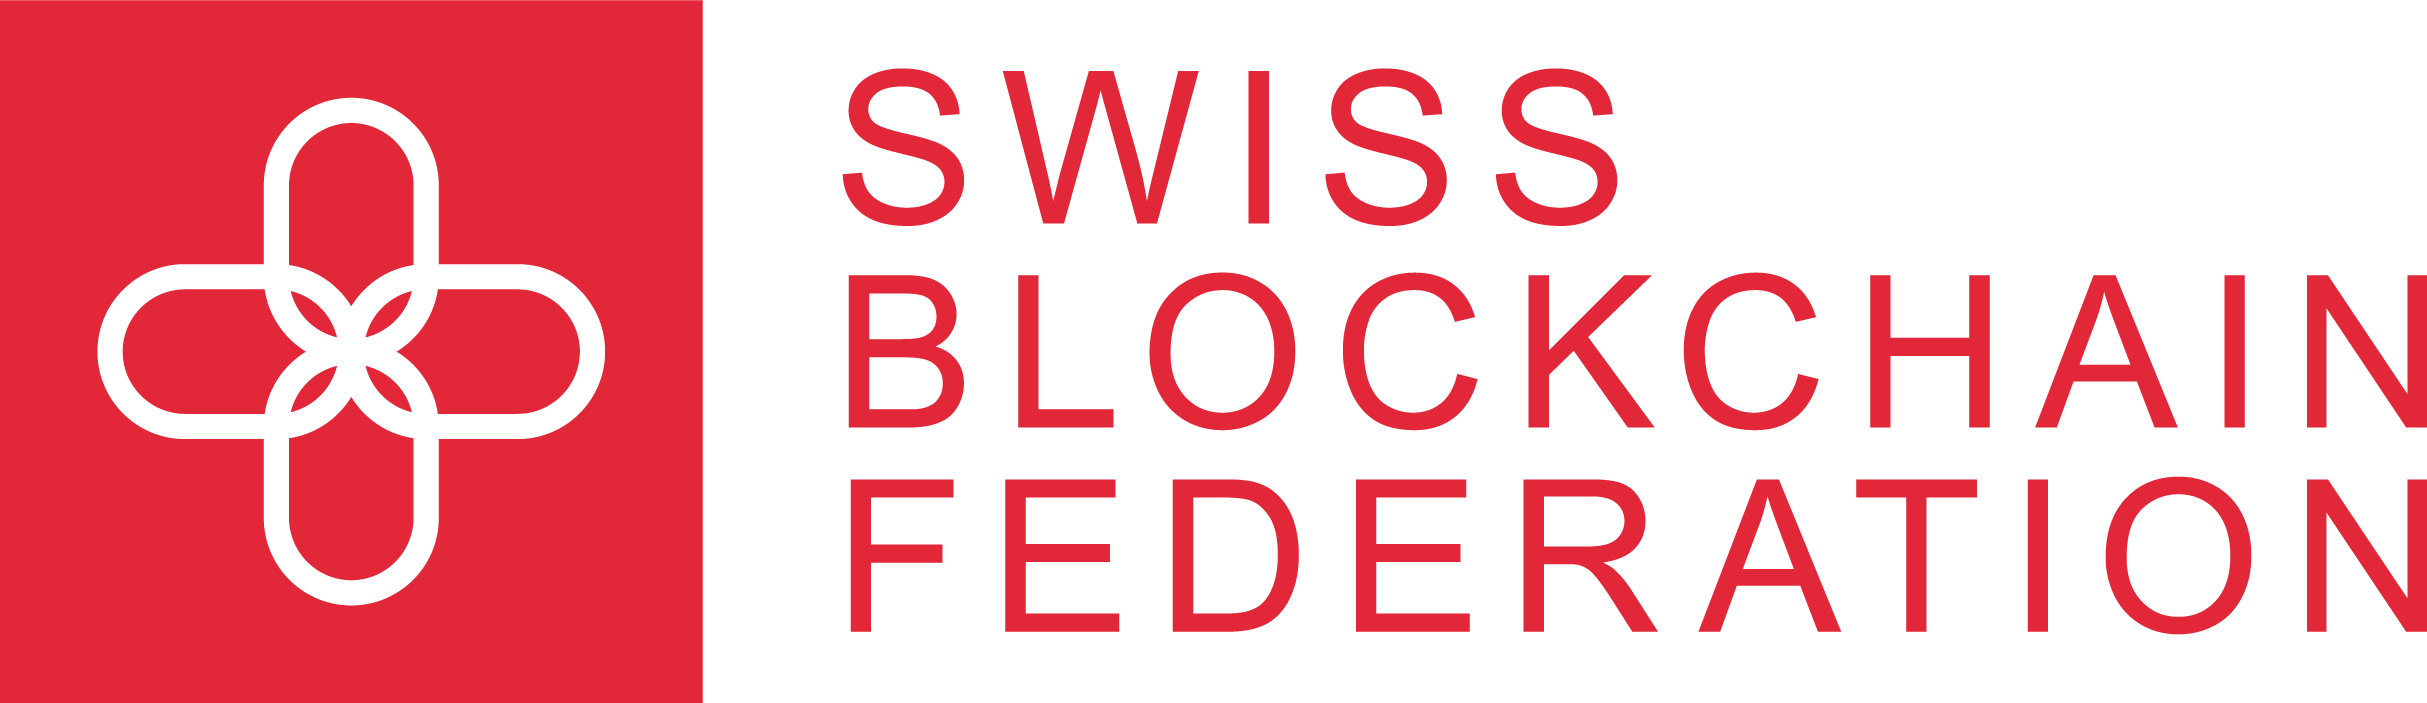 swiss blockchain federation logo